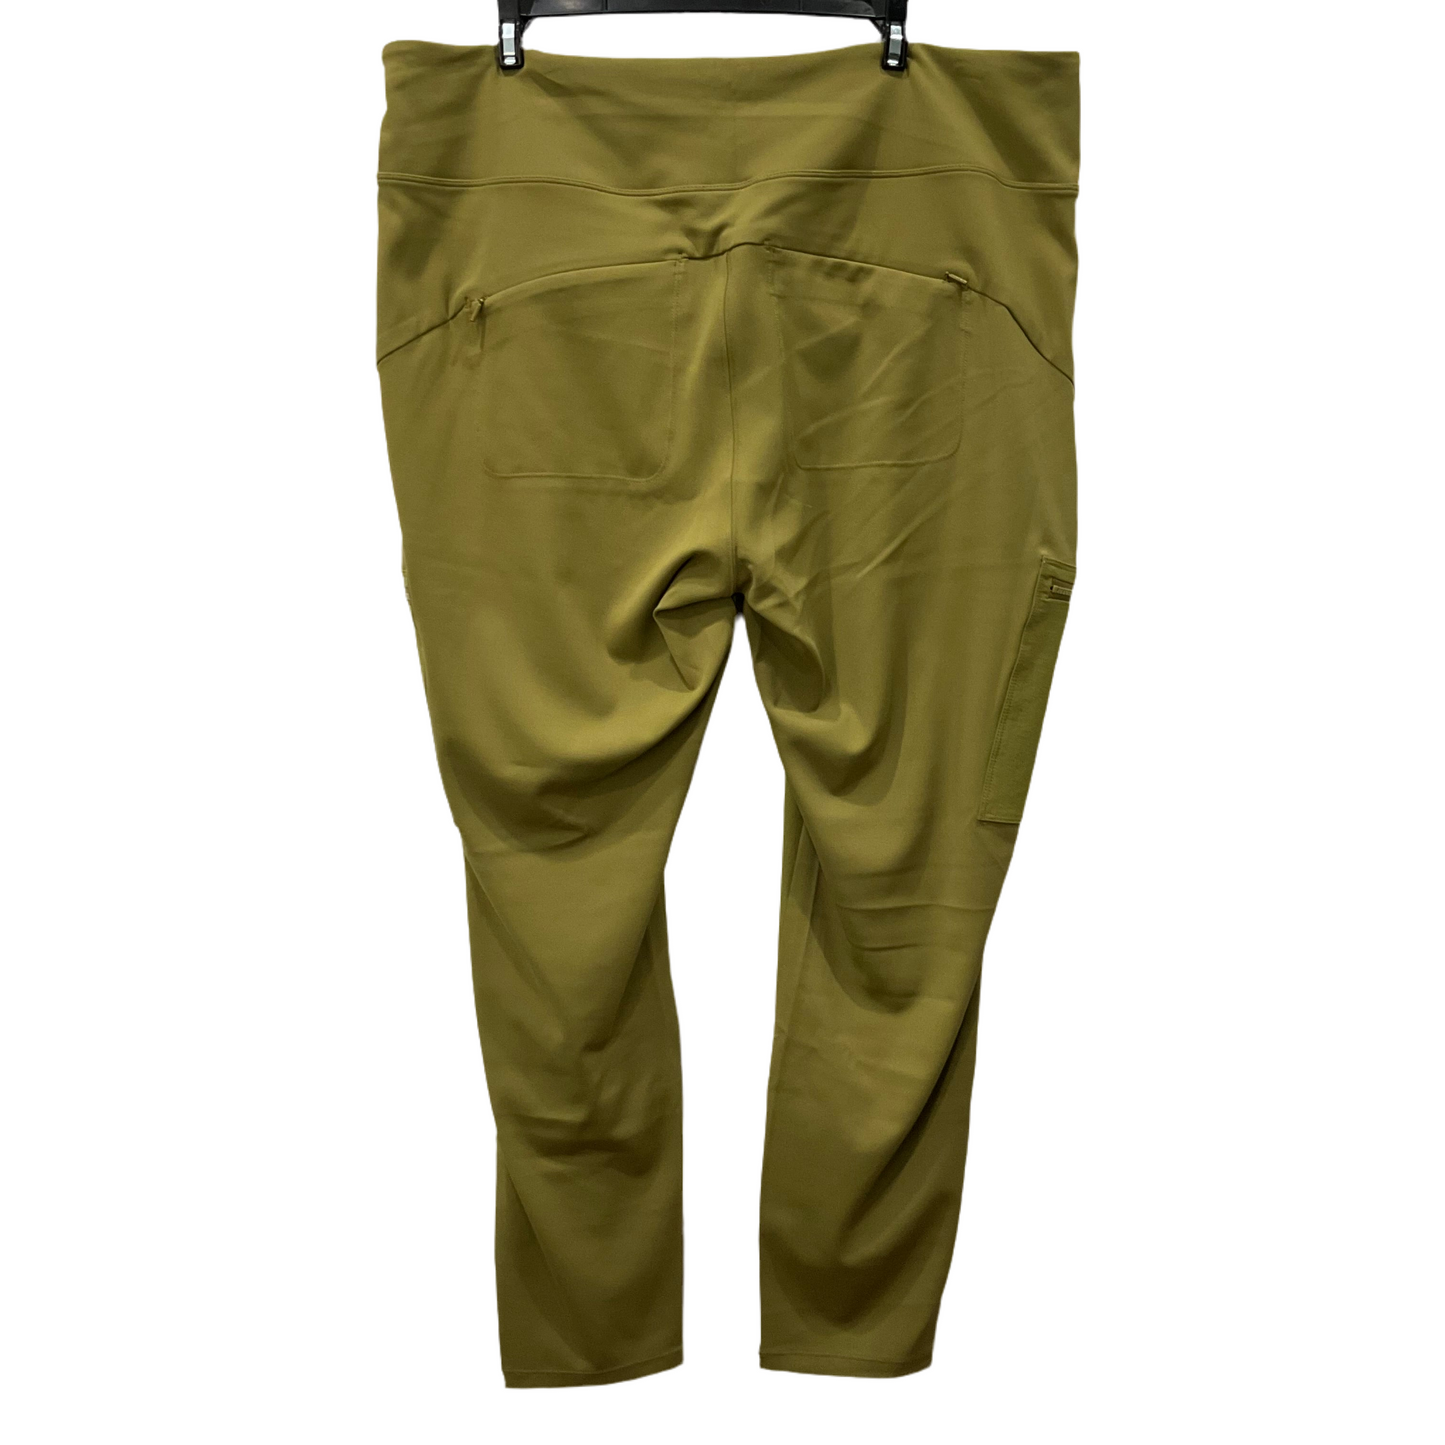 Green Athletic Pants Athleta, Size 22